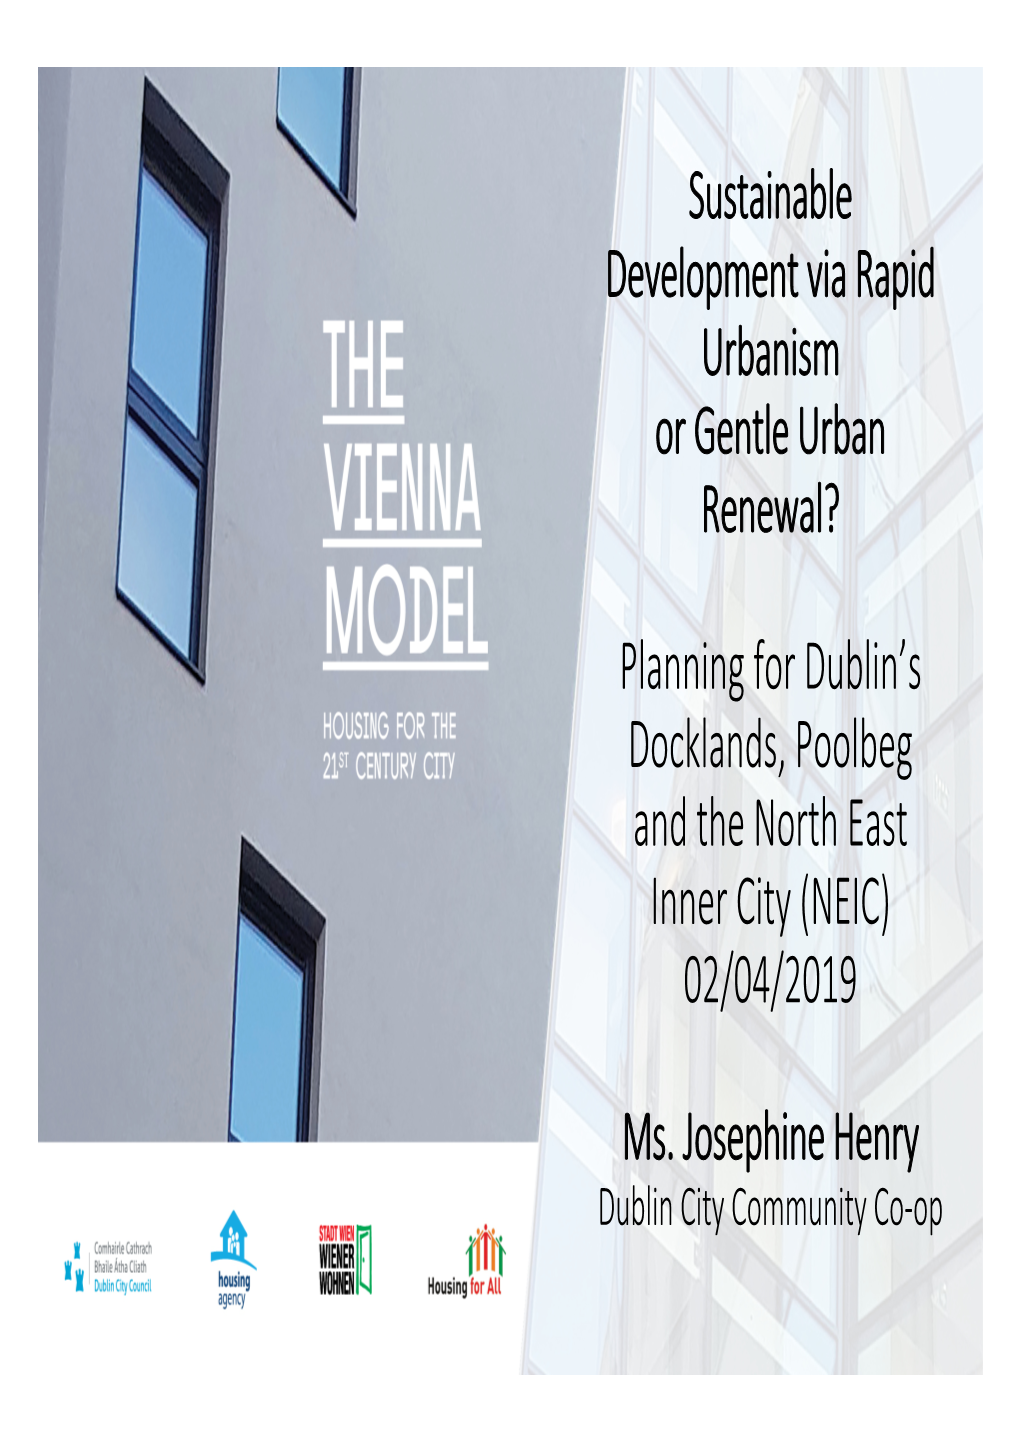 Planning for Dublin's Docklands, Poolbeg